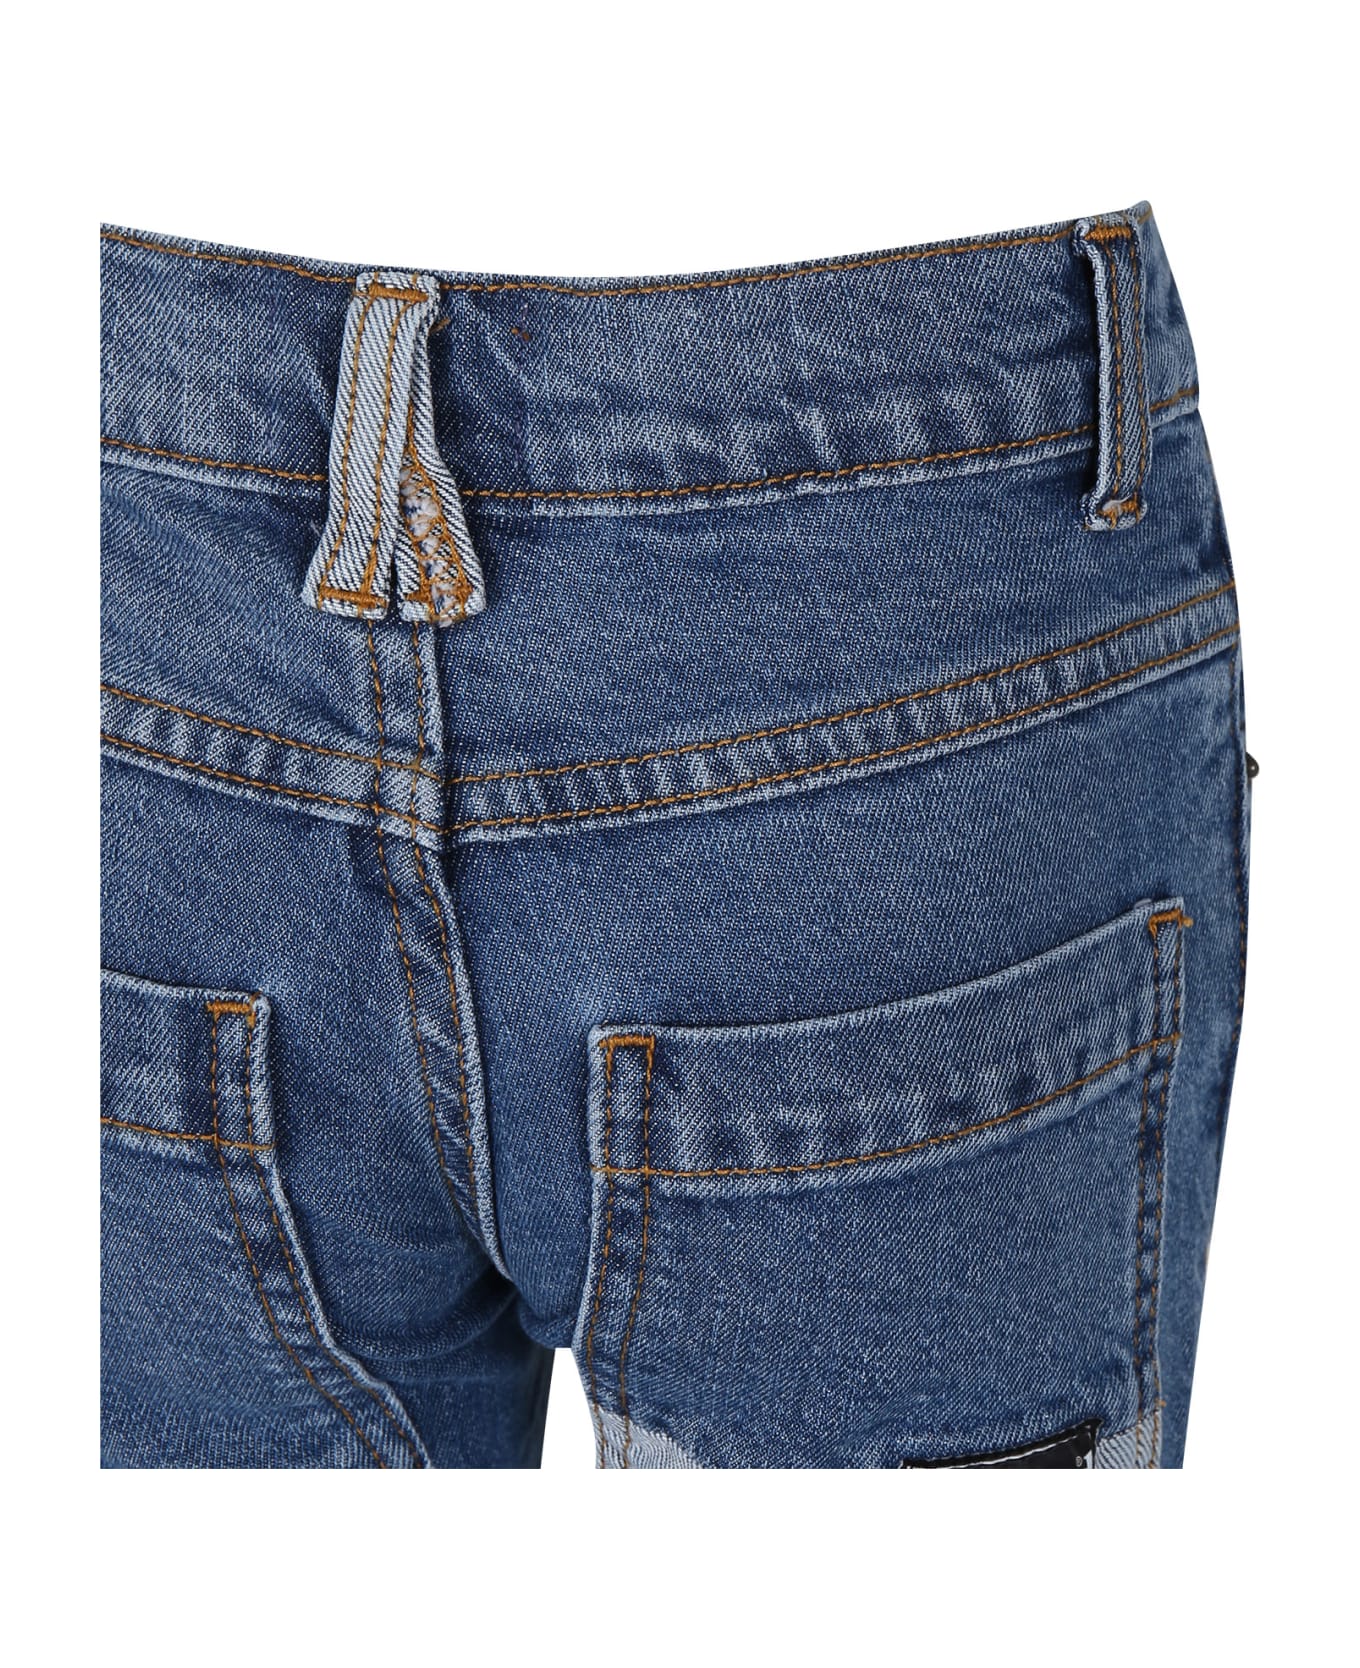 Timberland Denim Jeans For Boy With Logo - Denim